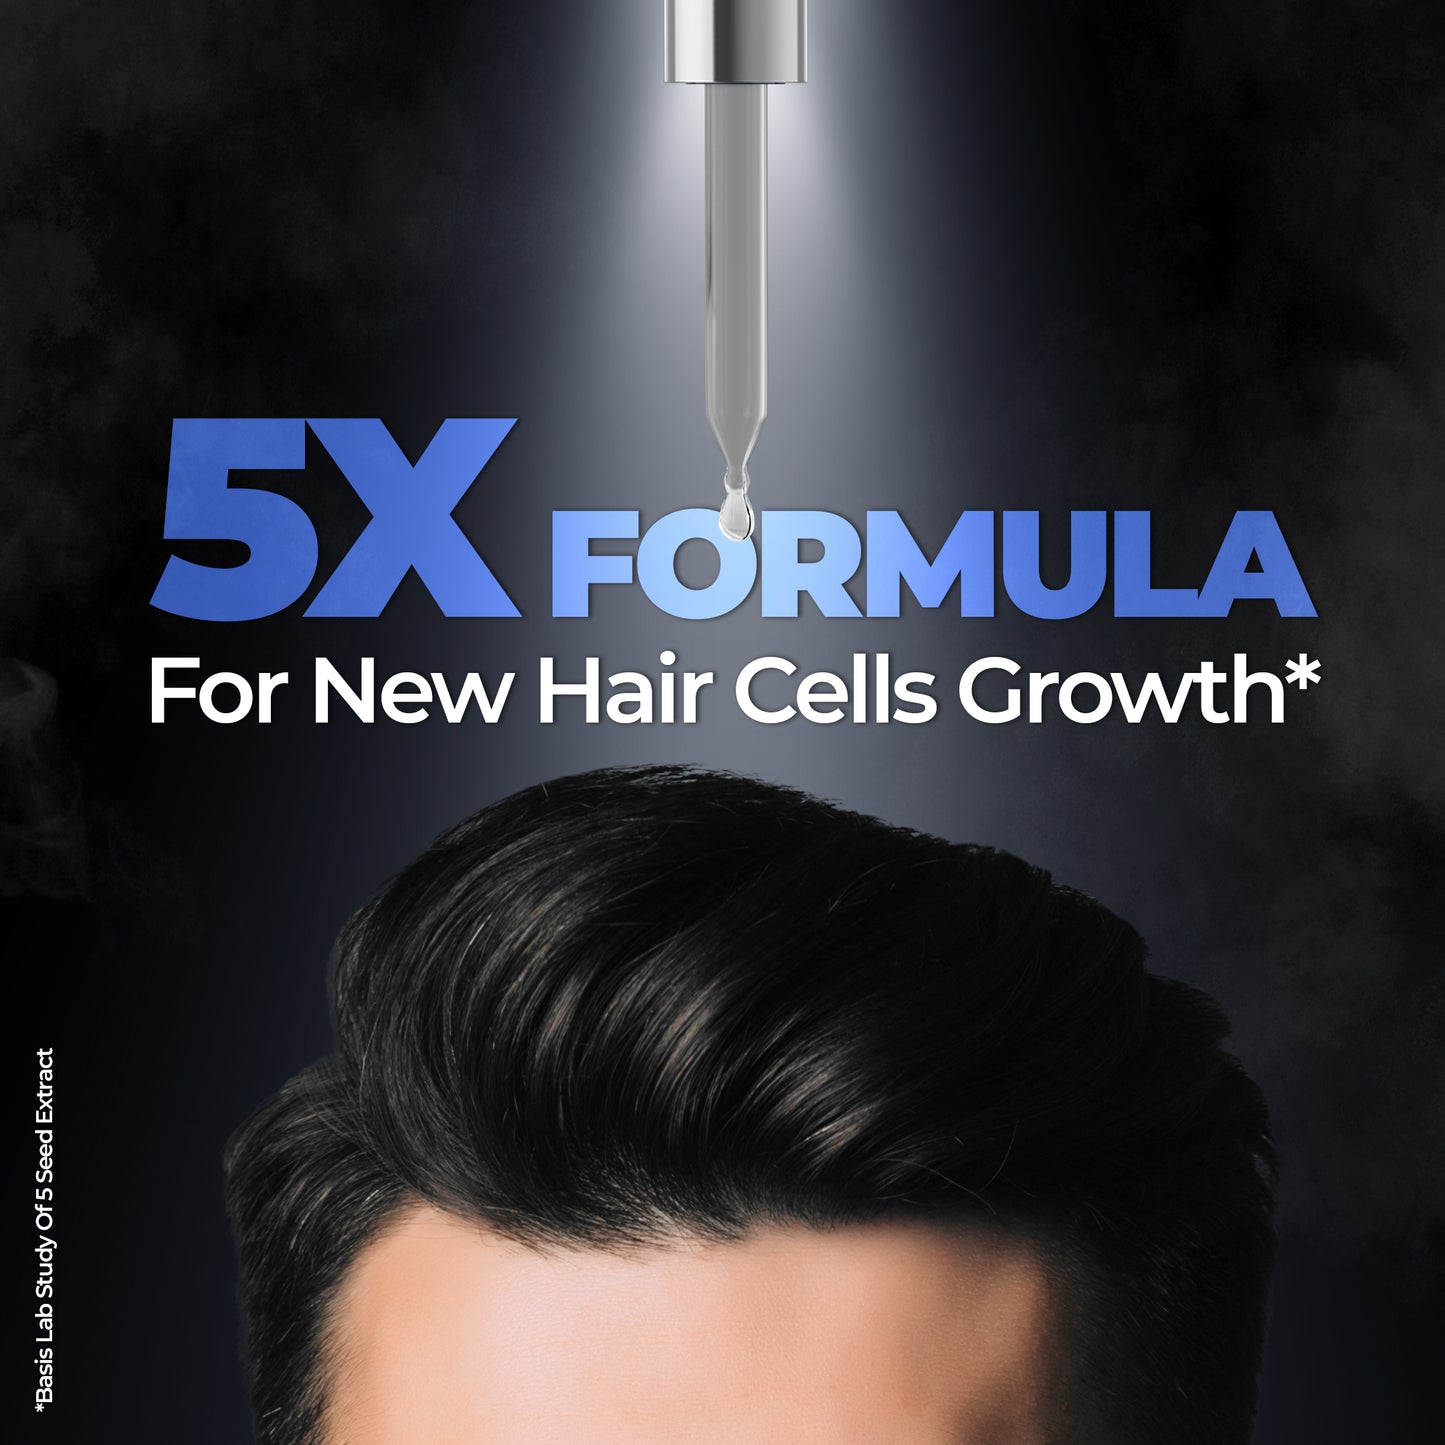 Beardo Hair Growth Pro Kit